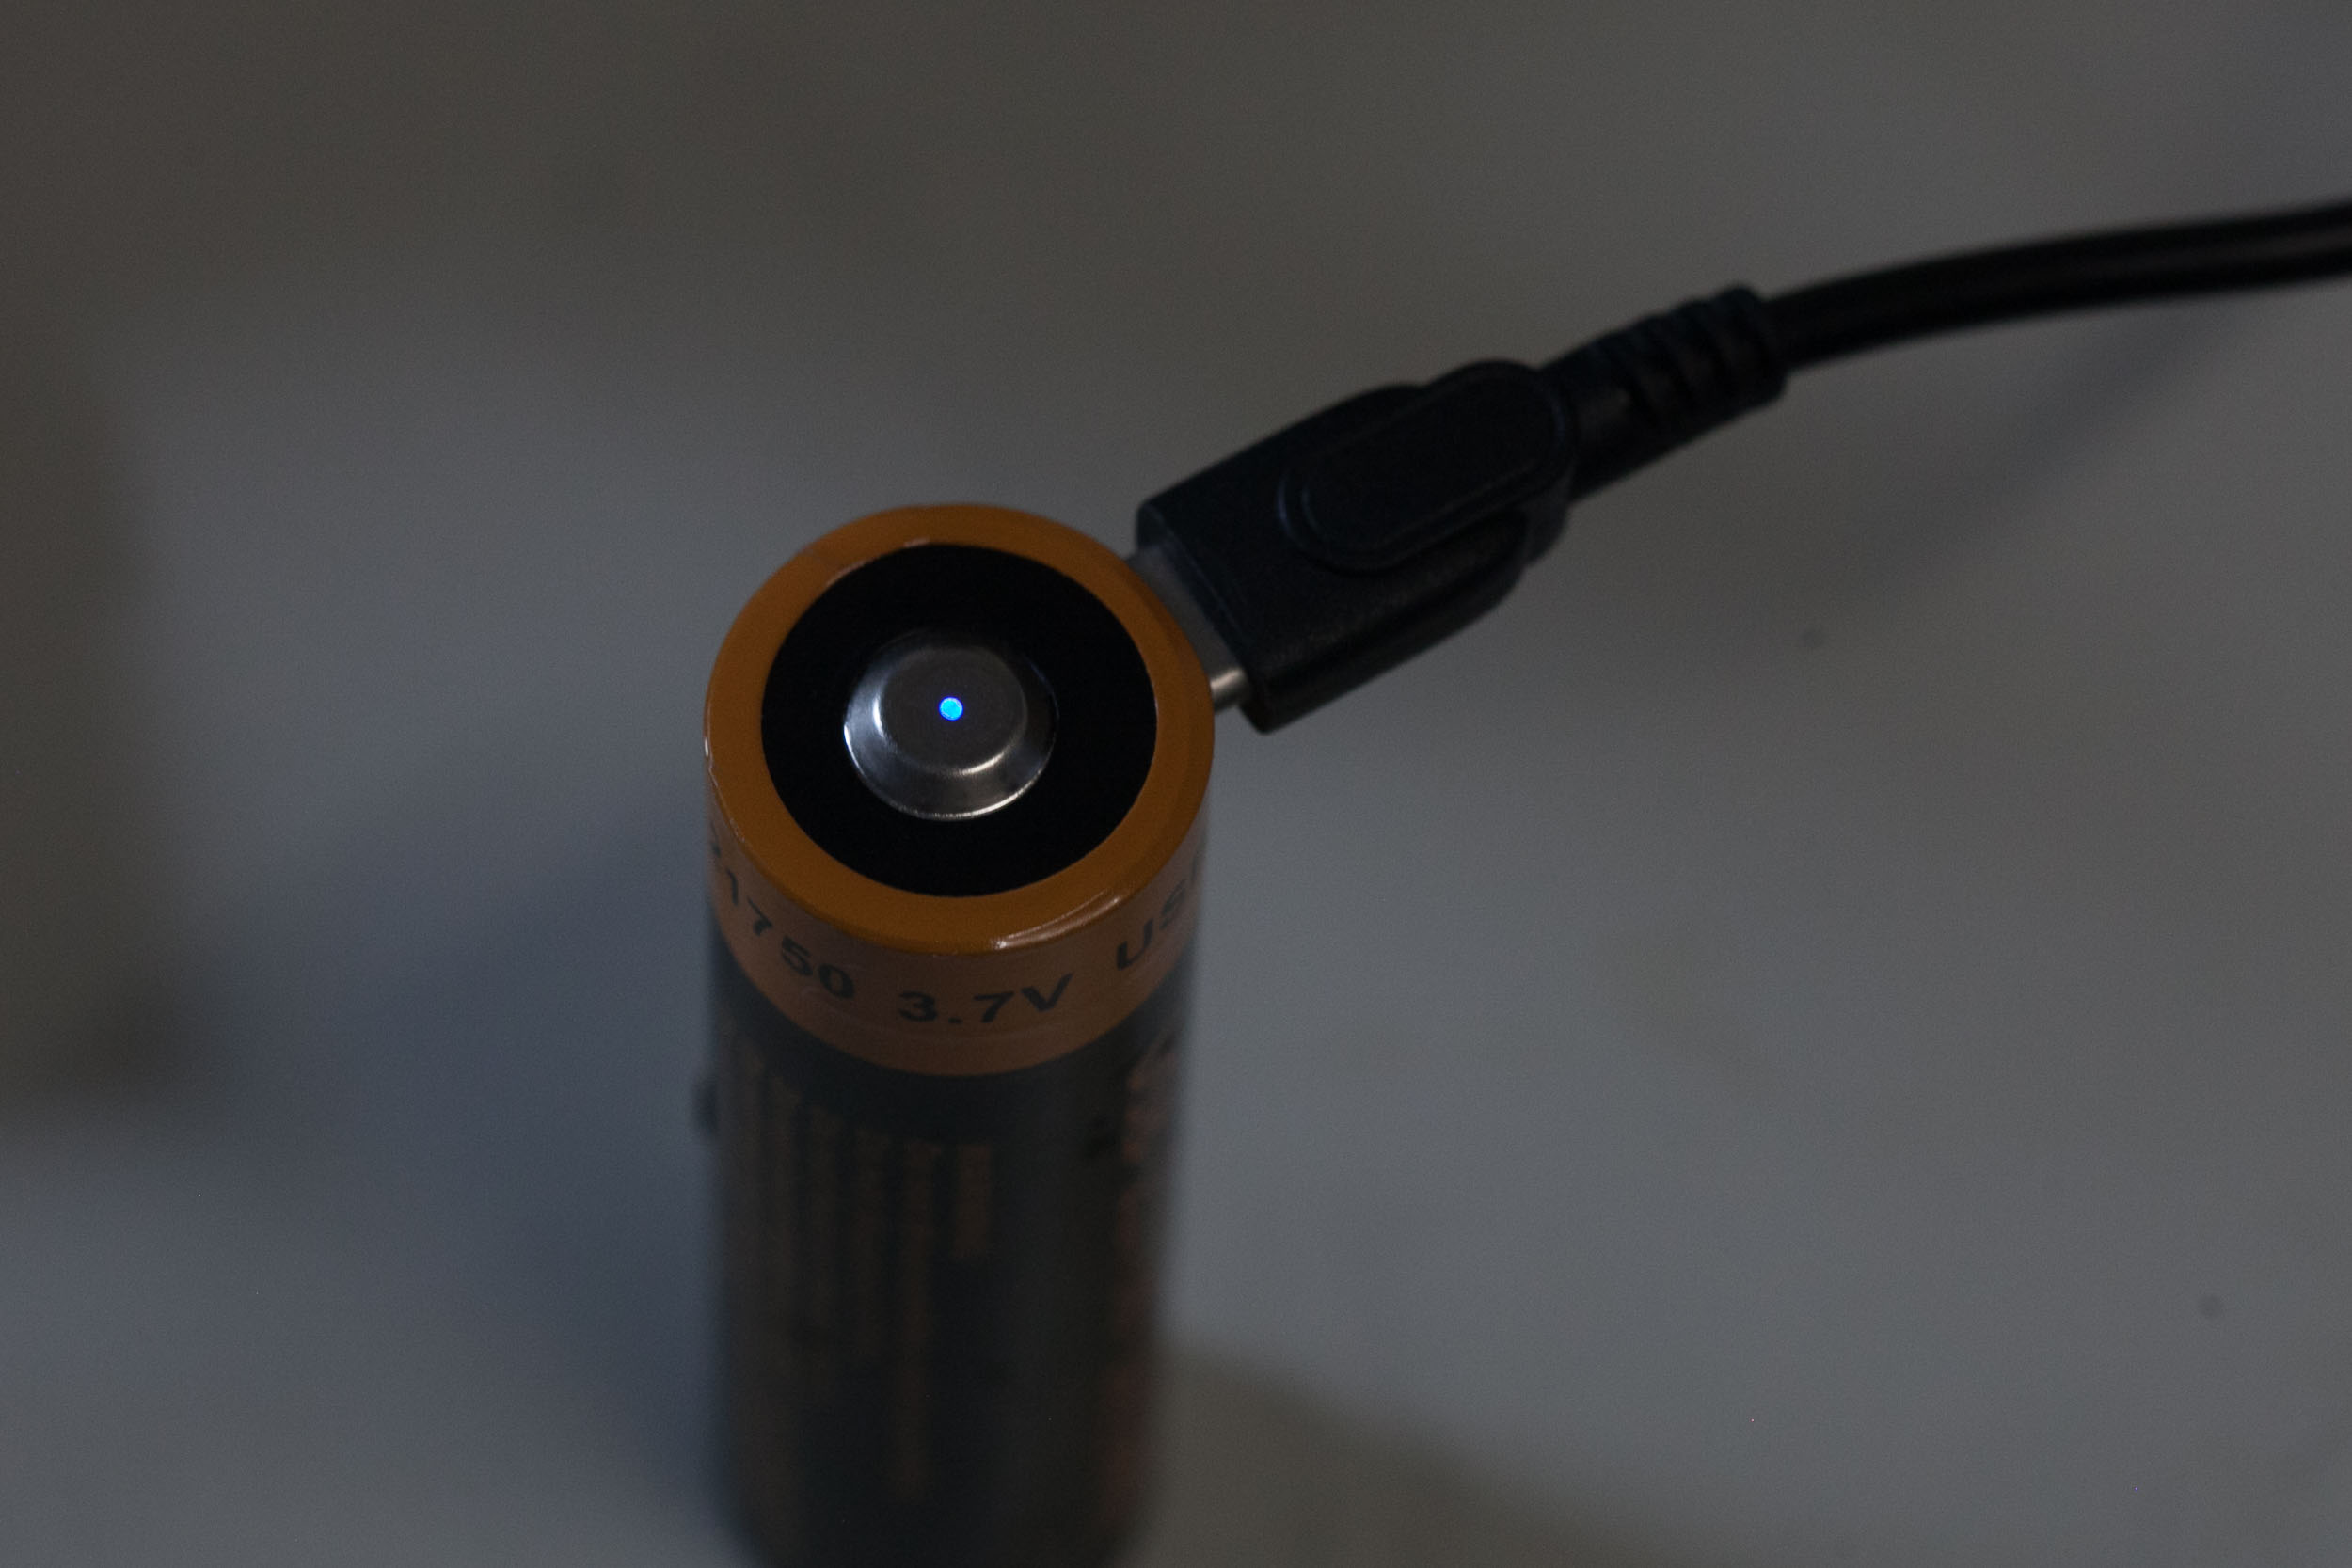 fireflylite 21700 battery usb charging